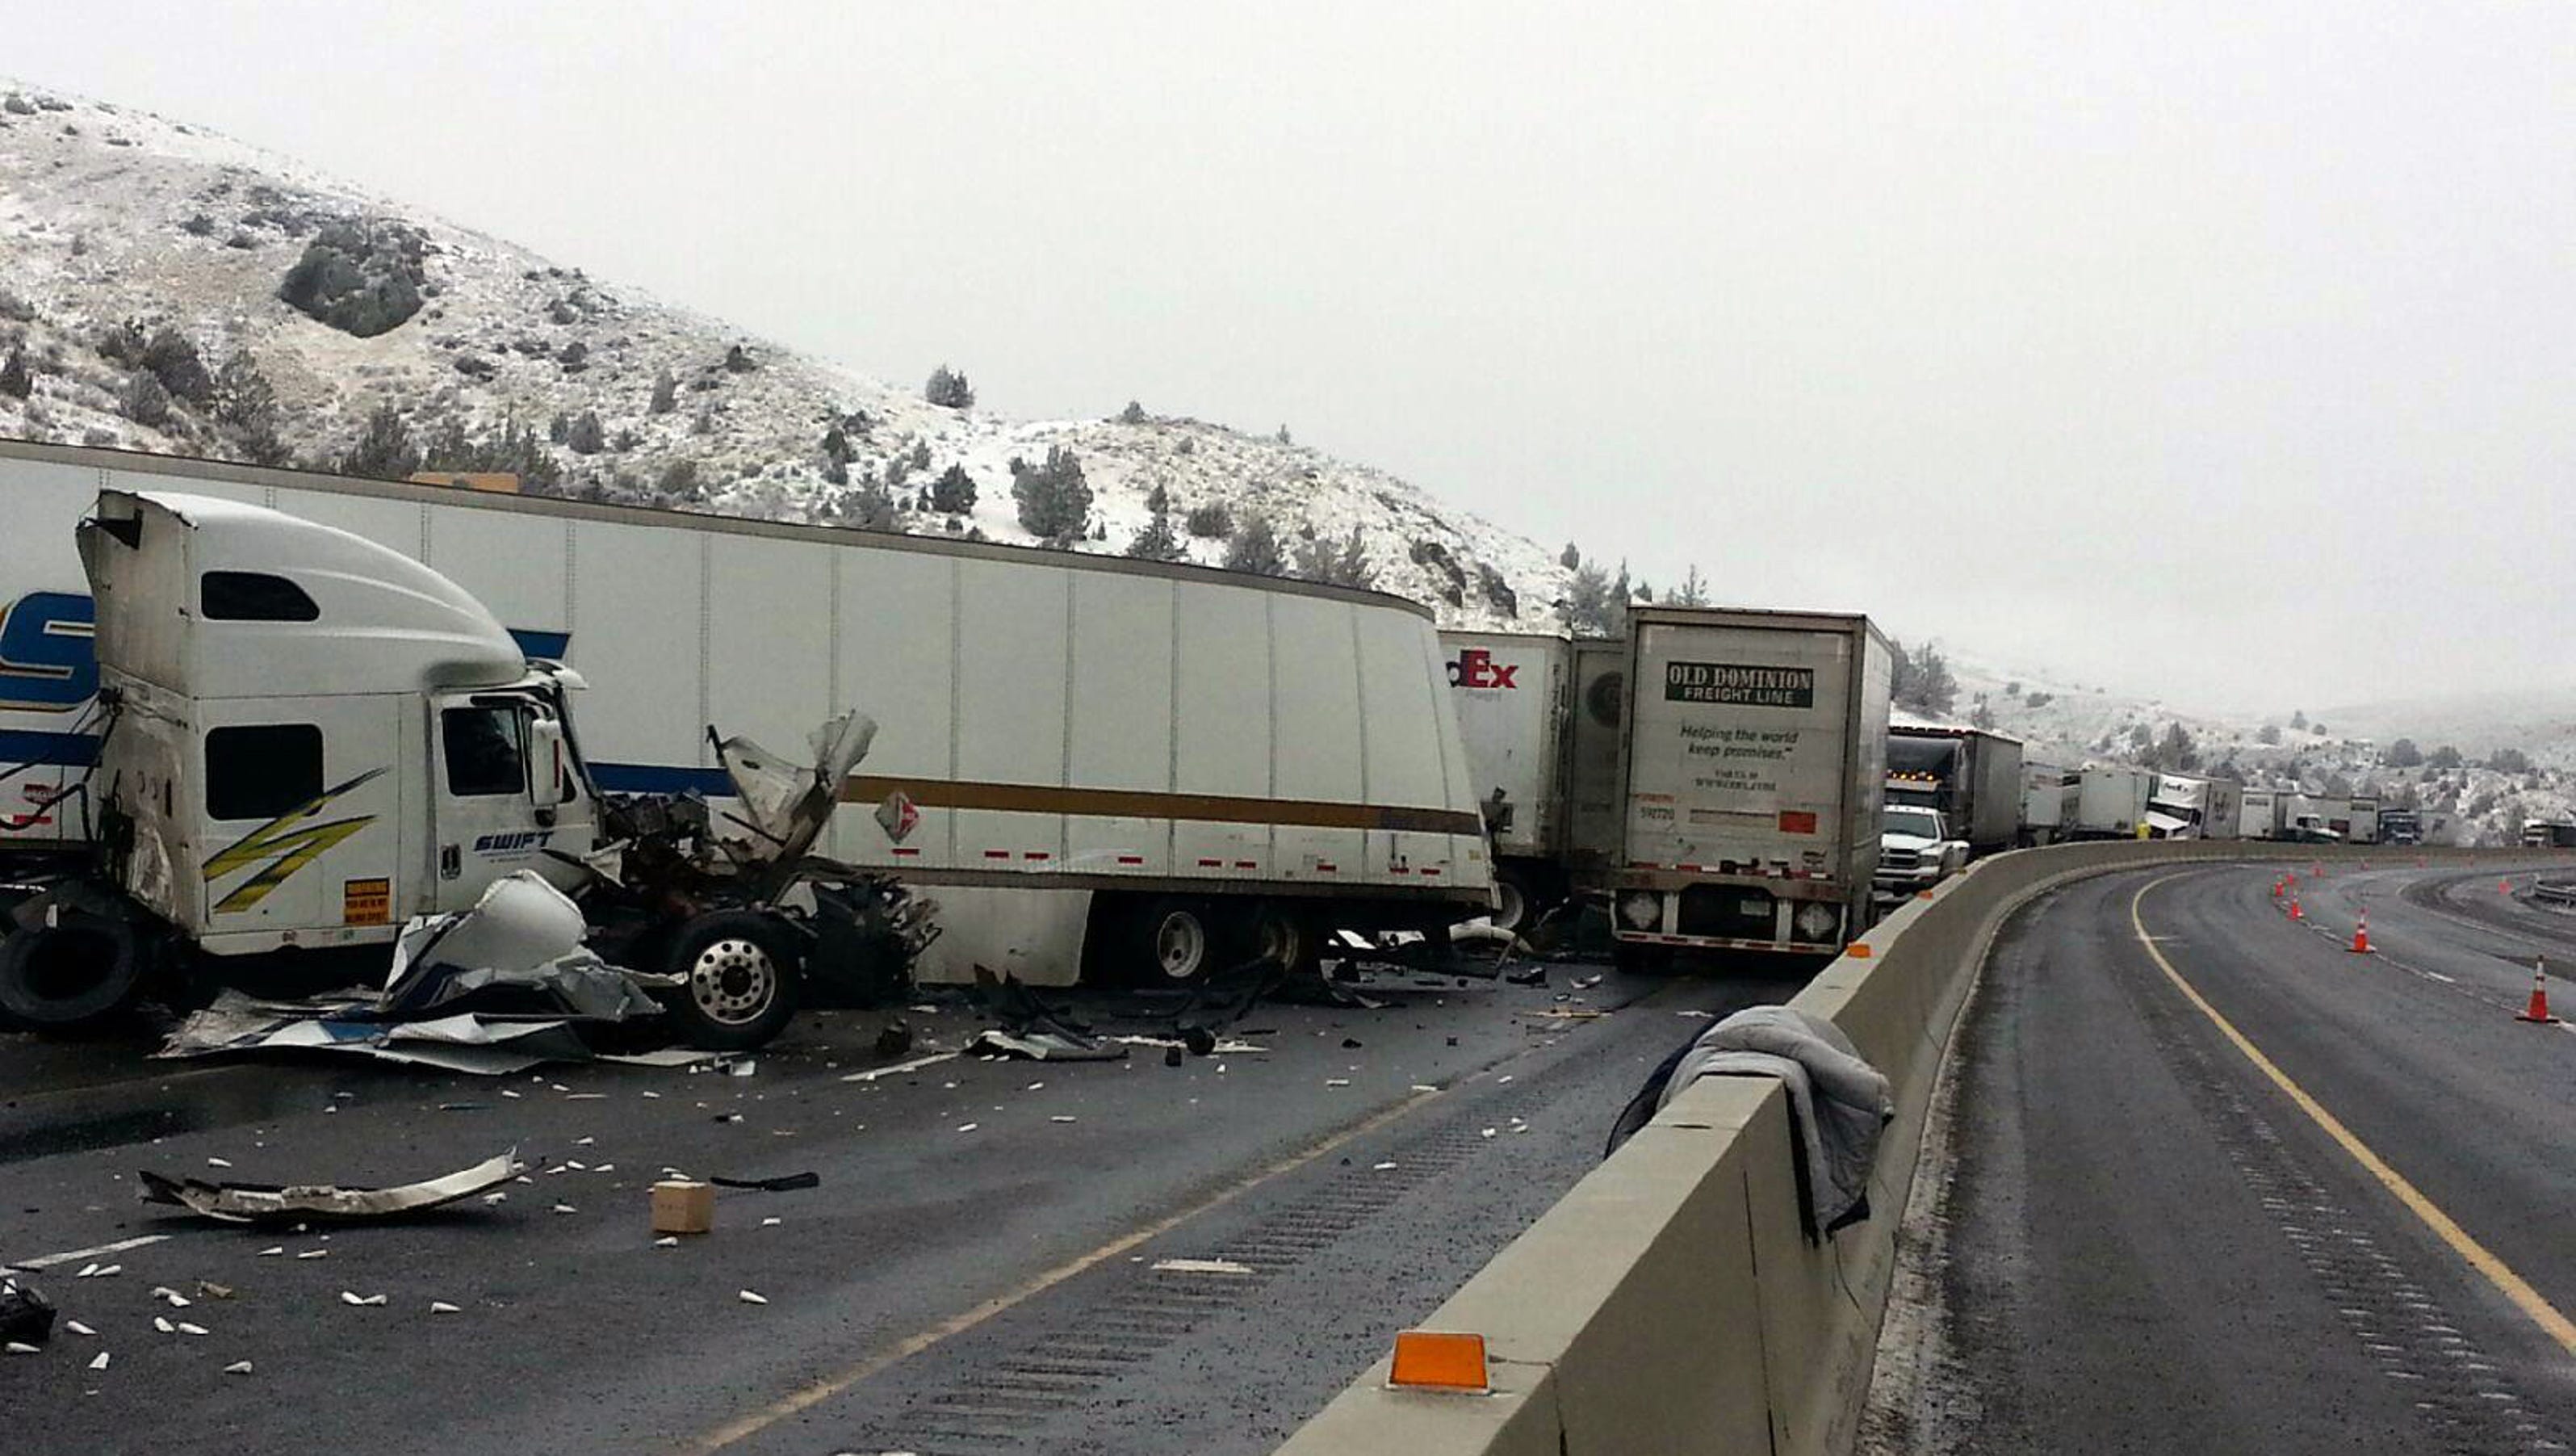 12 injured in massive Interstate 84 crash in Oregon